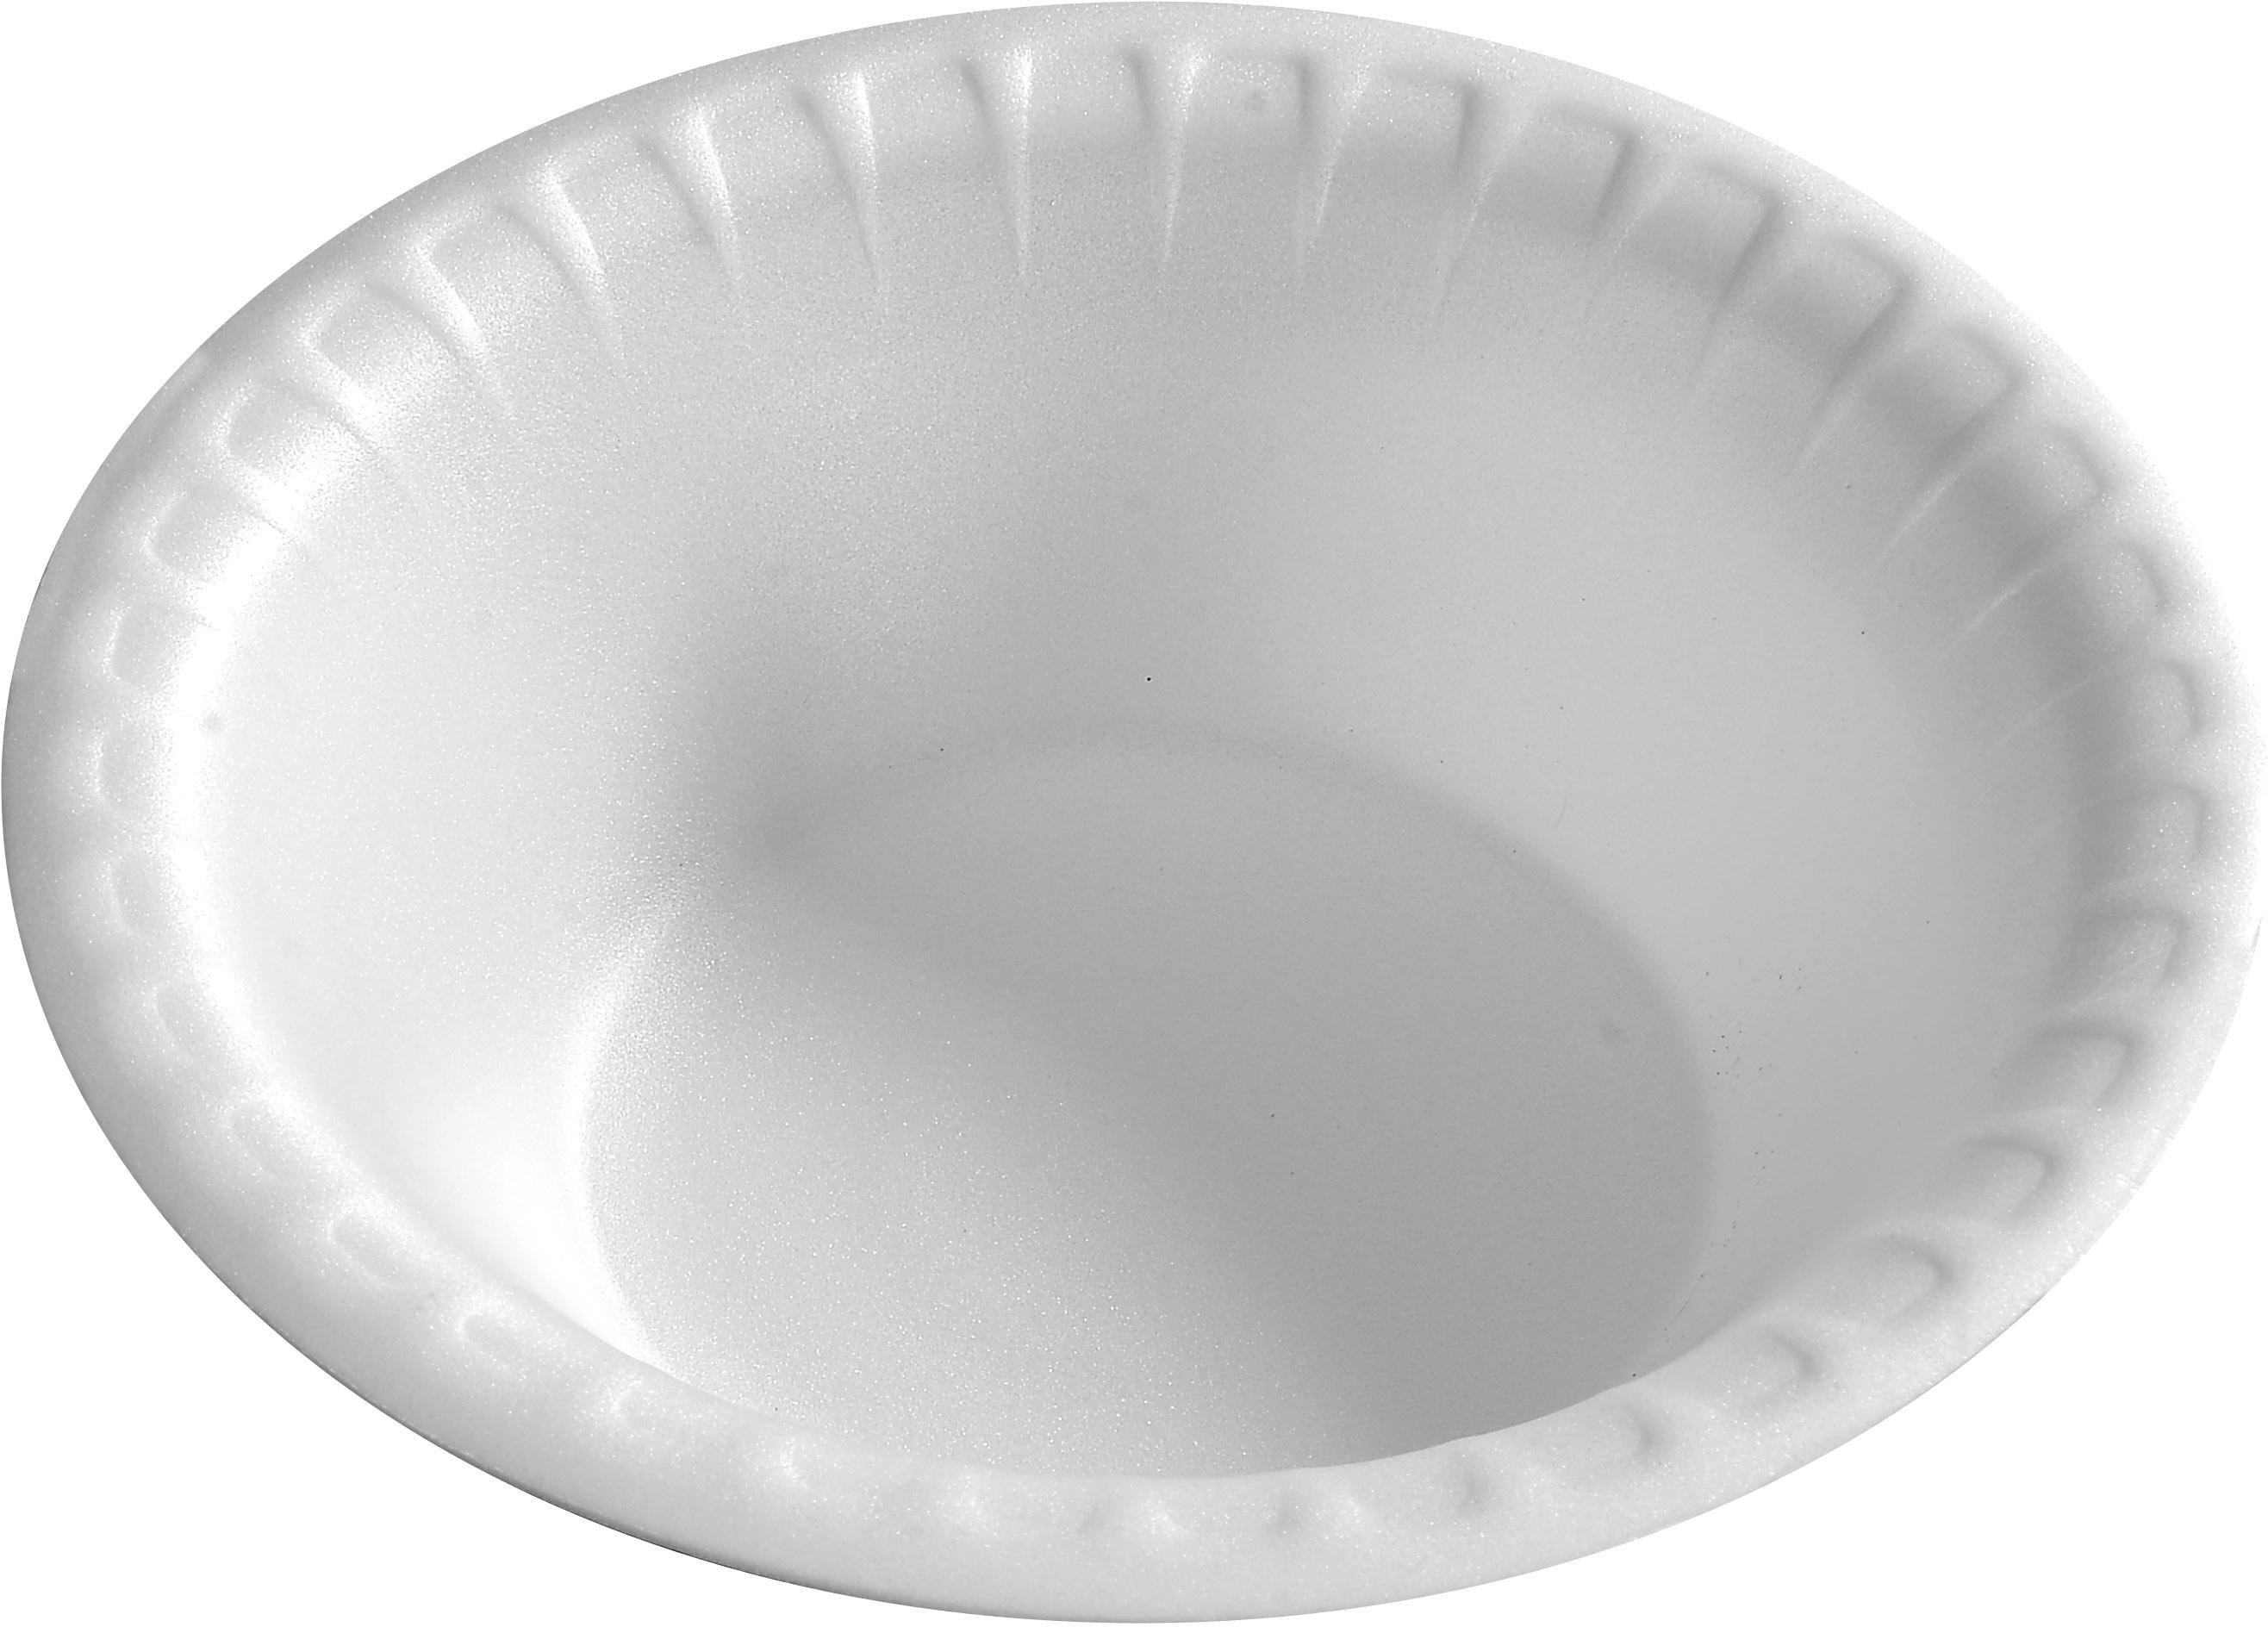 120z Disposable Bowl